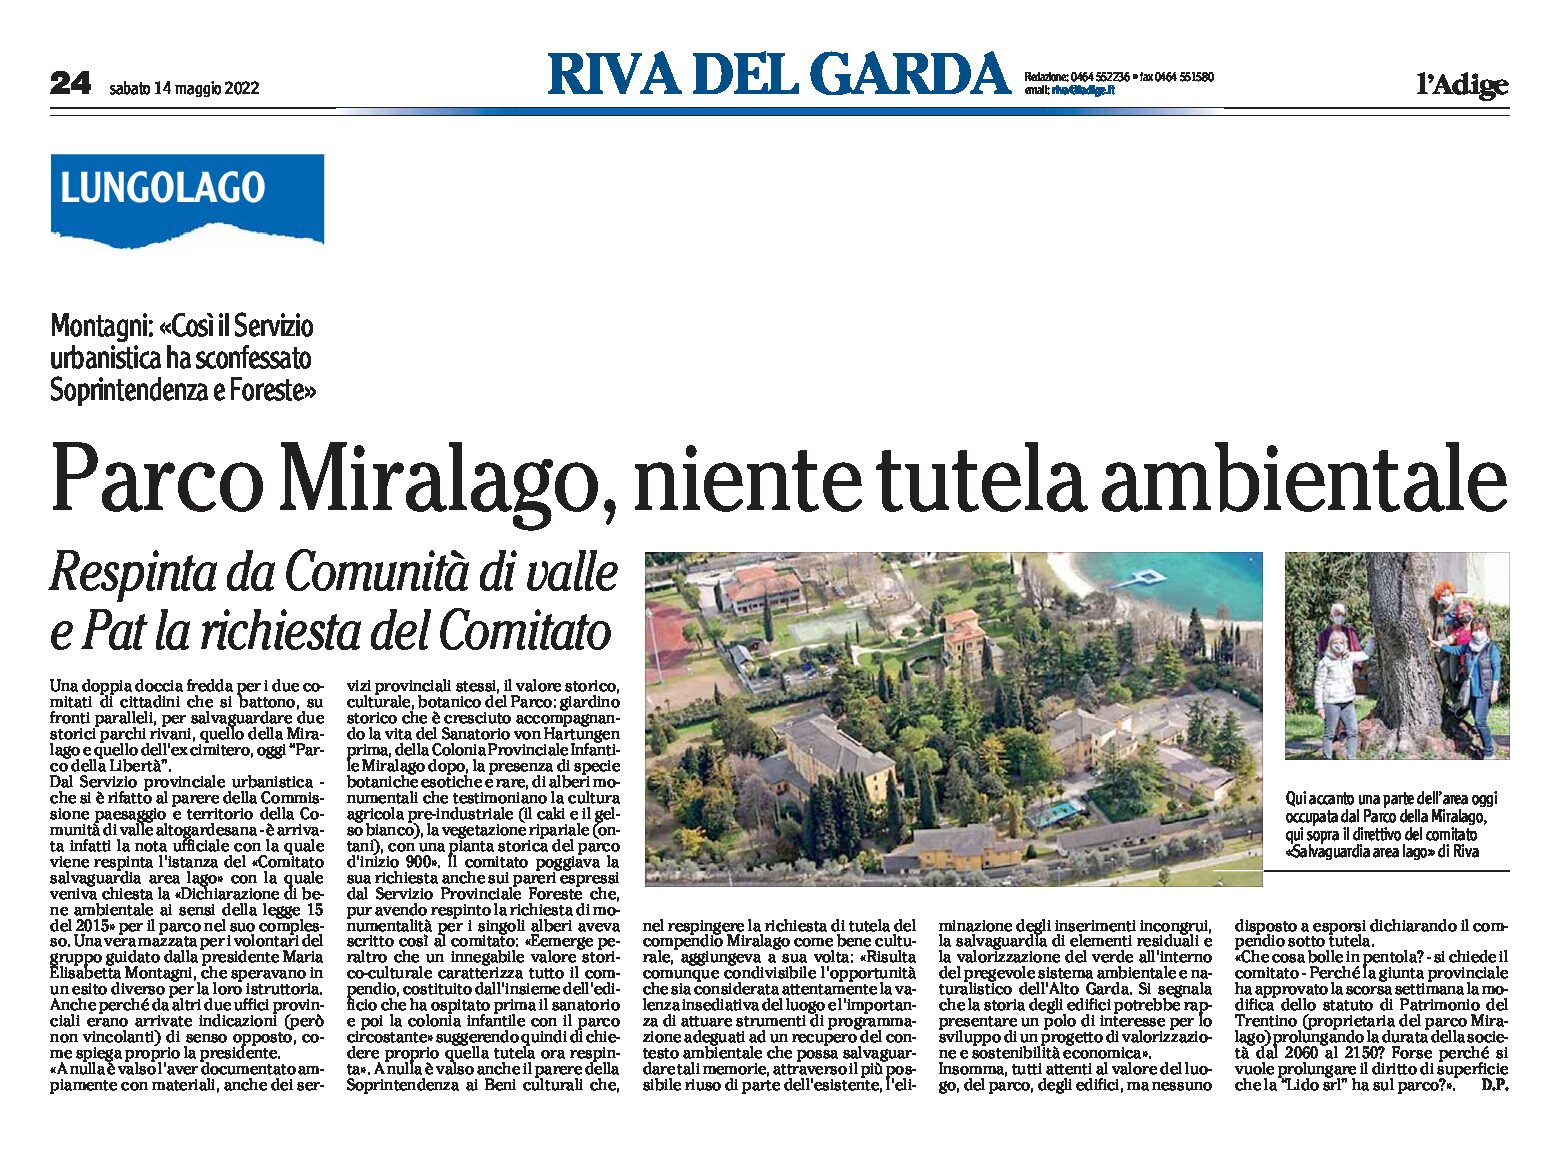 Riva, lungolago: Parco Miralago, niente tutela ambientale